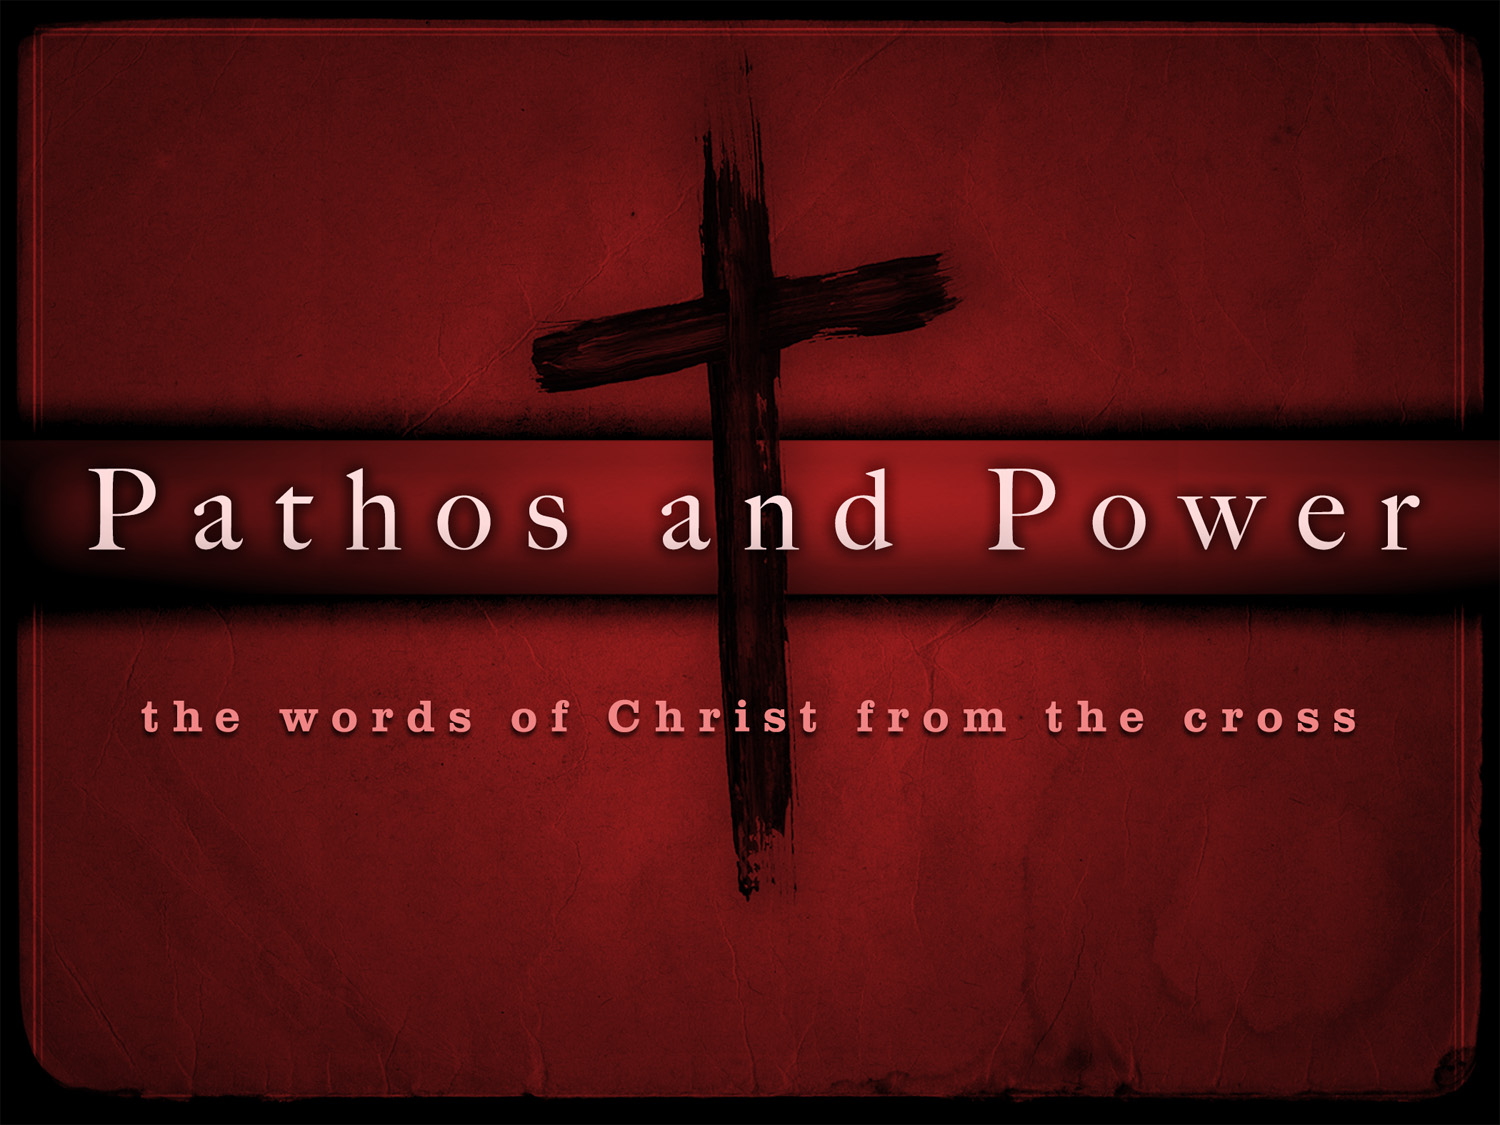 Pathos and Power: Forgiveness